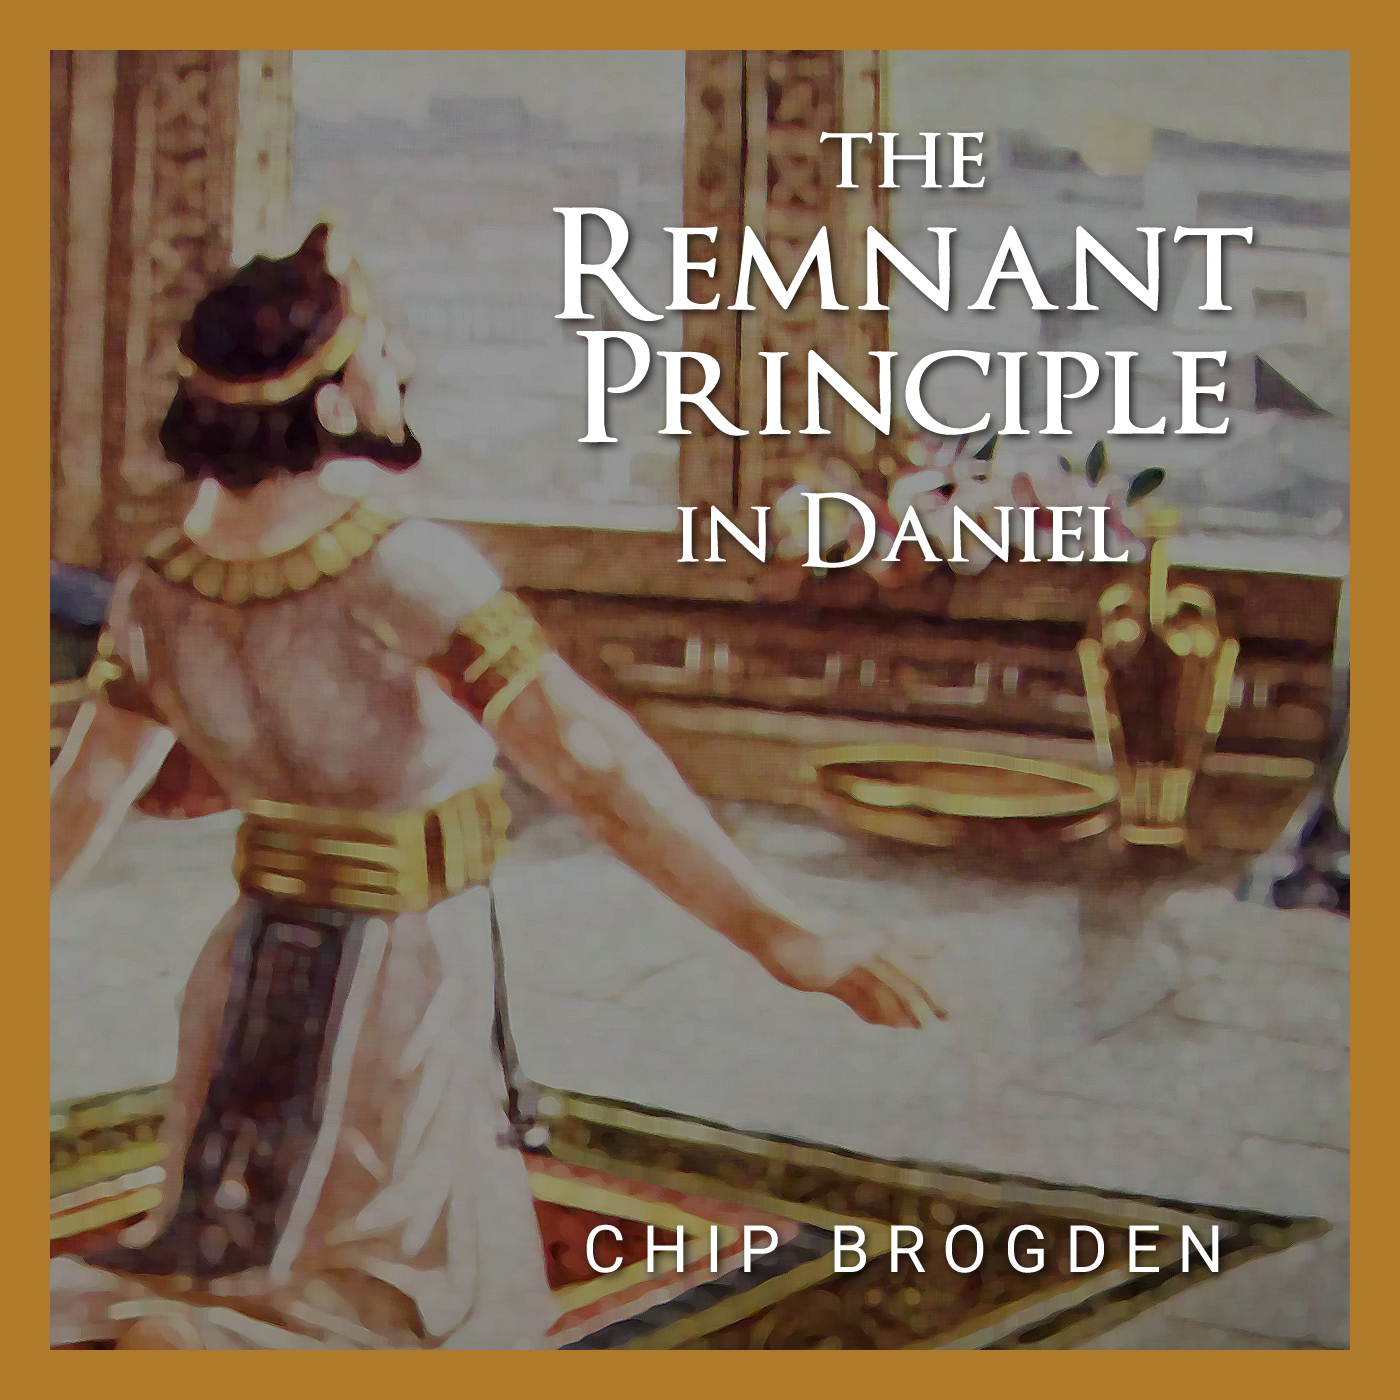 The Remnant Principle in Daniel